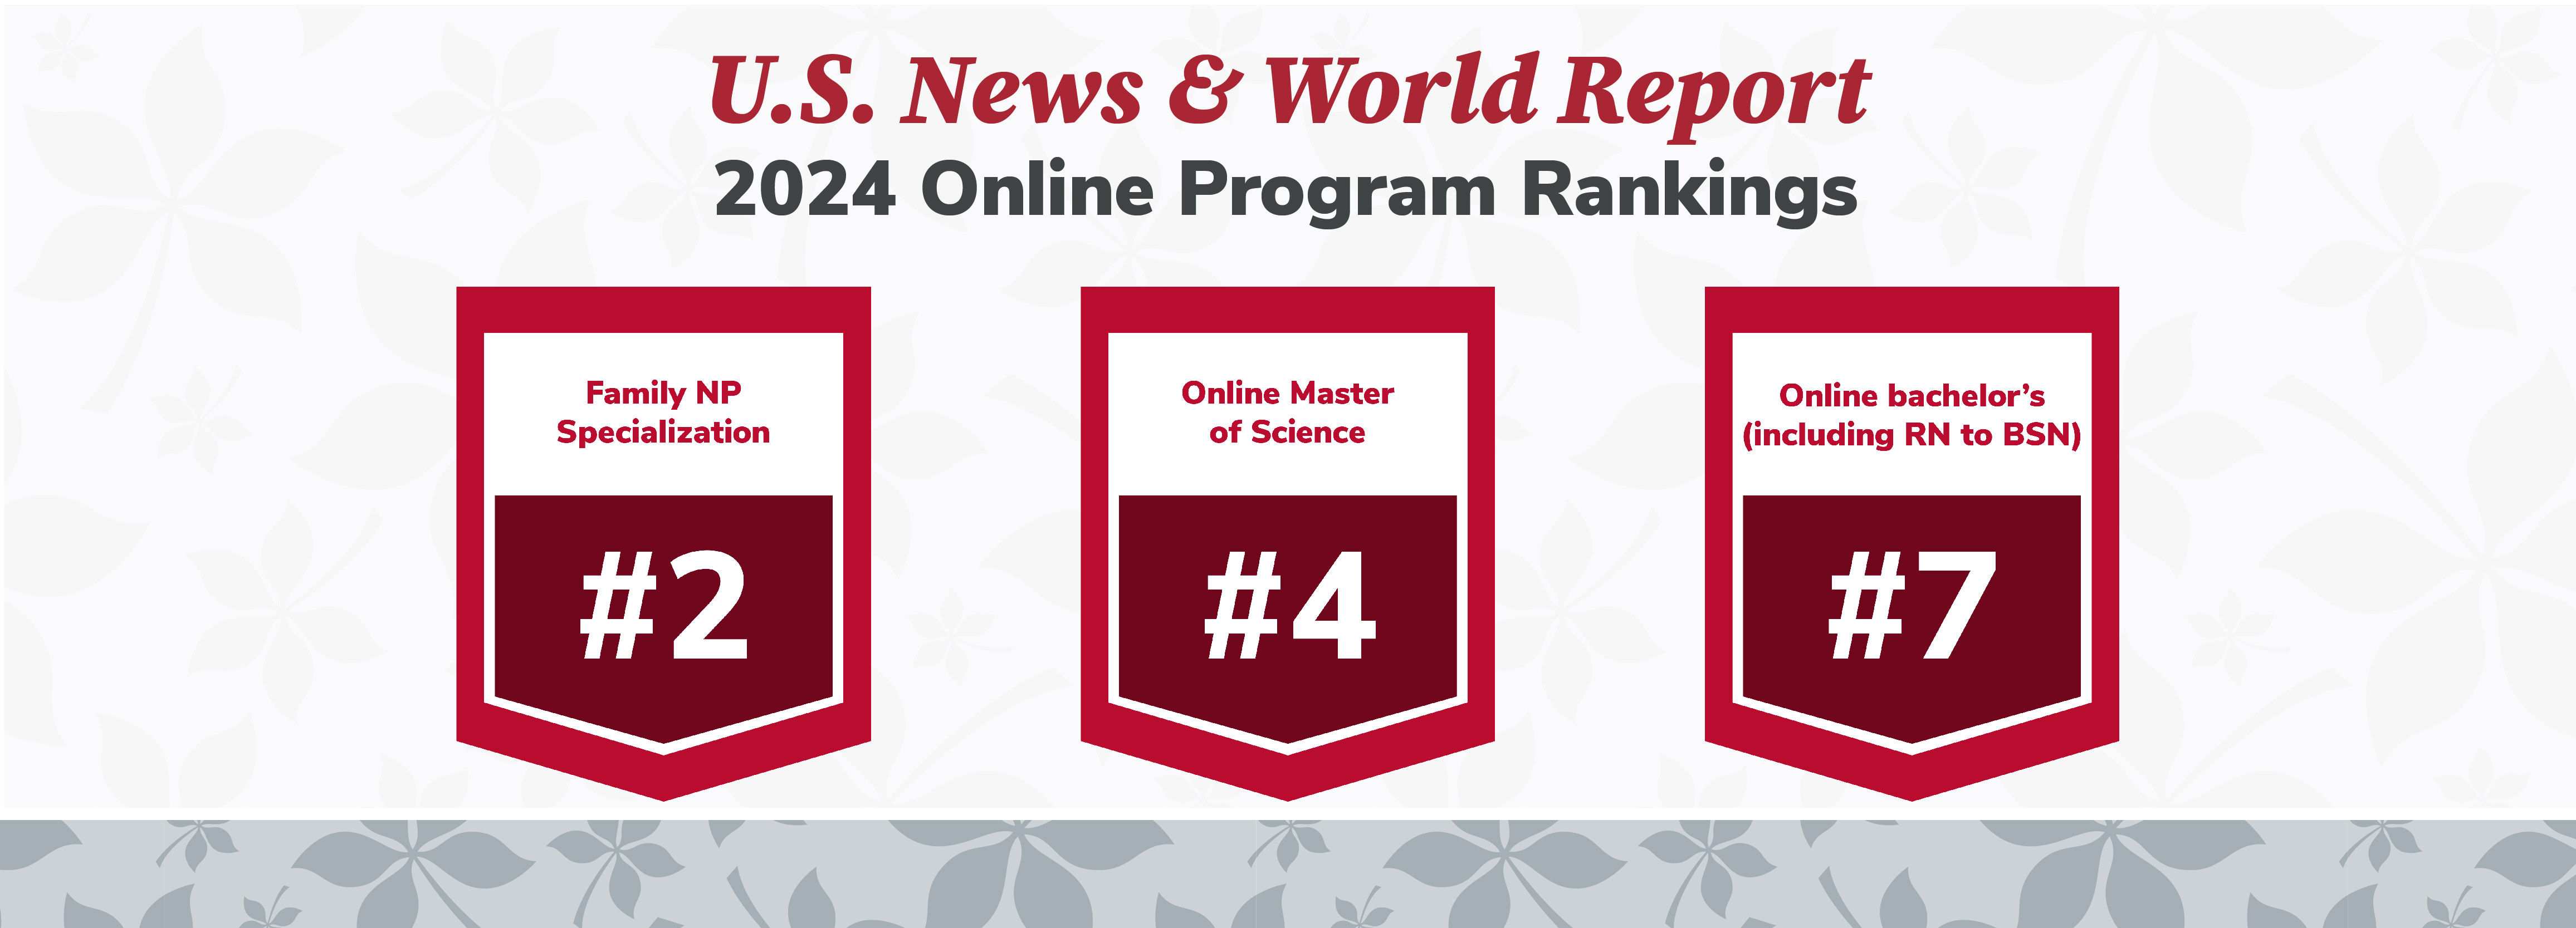 U.S. News & World Report 2024 Online Program Rankings